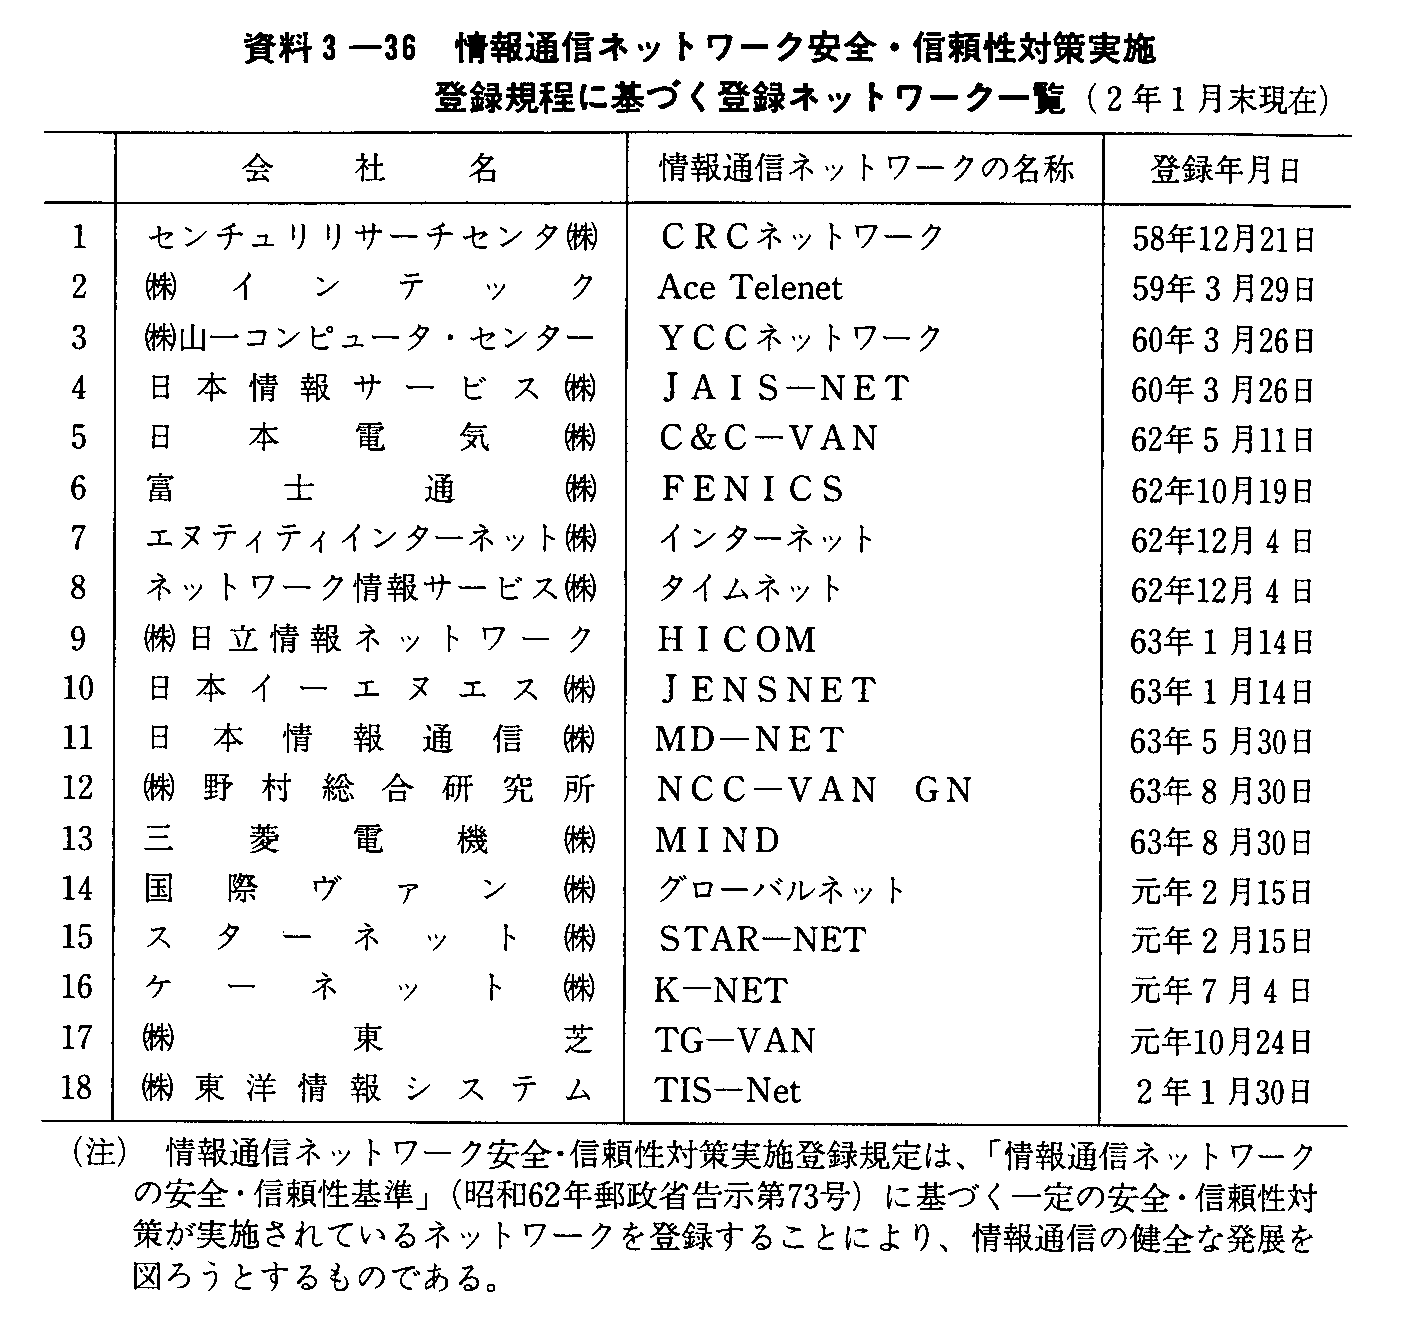 3-36 ʐMlbg[NSEM΍{ o^KɊÂo^lbg[Nꗗ(2N1)